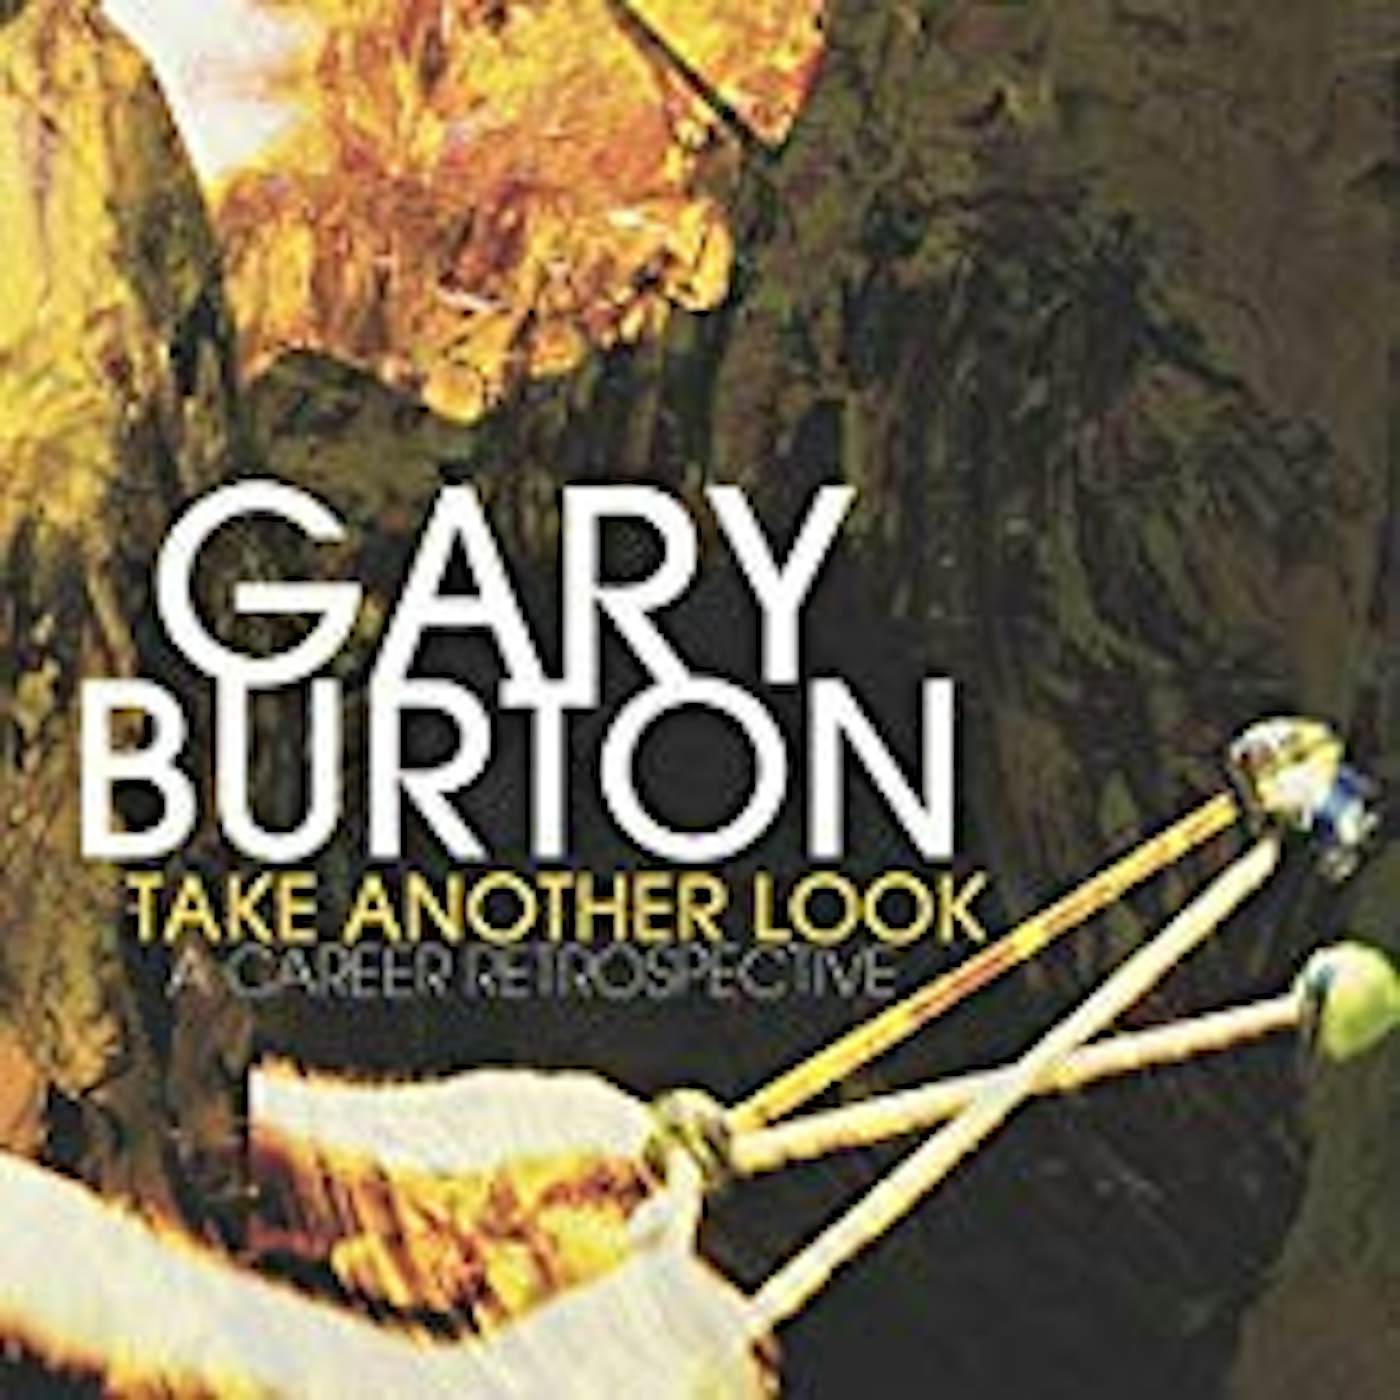 Gary Burton Take Another Look: a Career Retrospective Vinyl Record